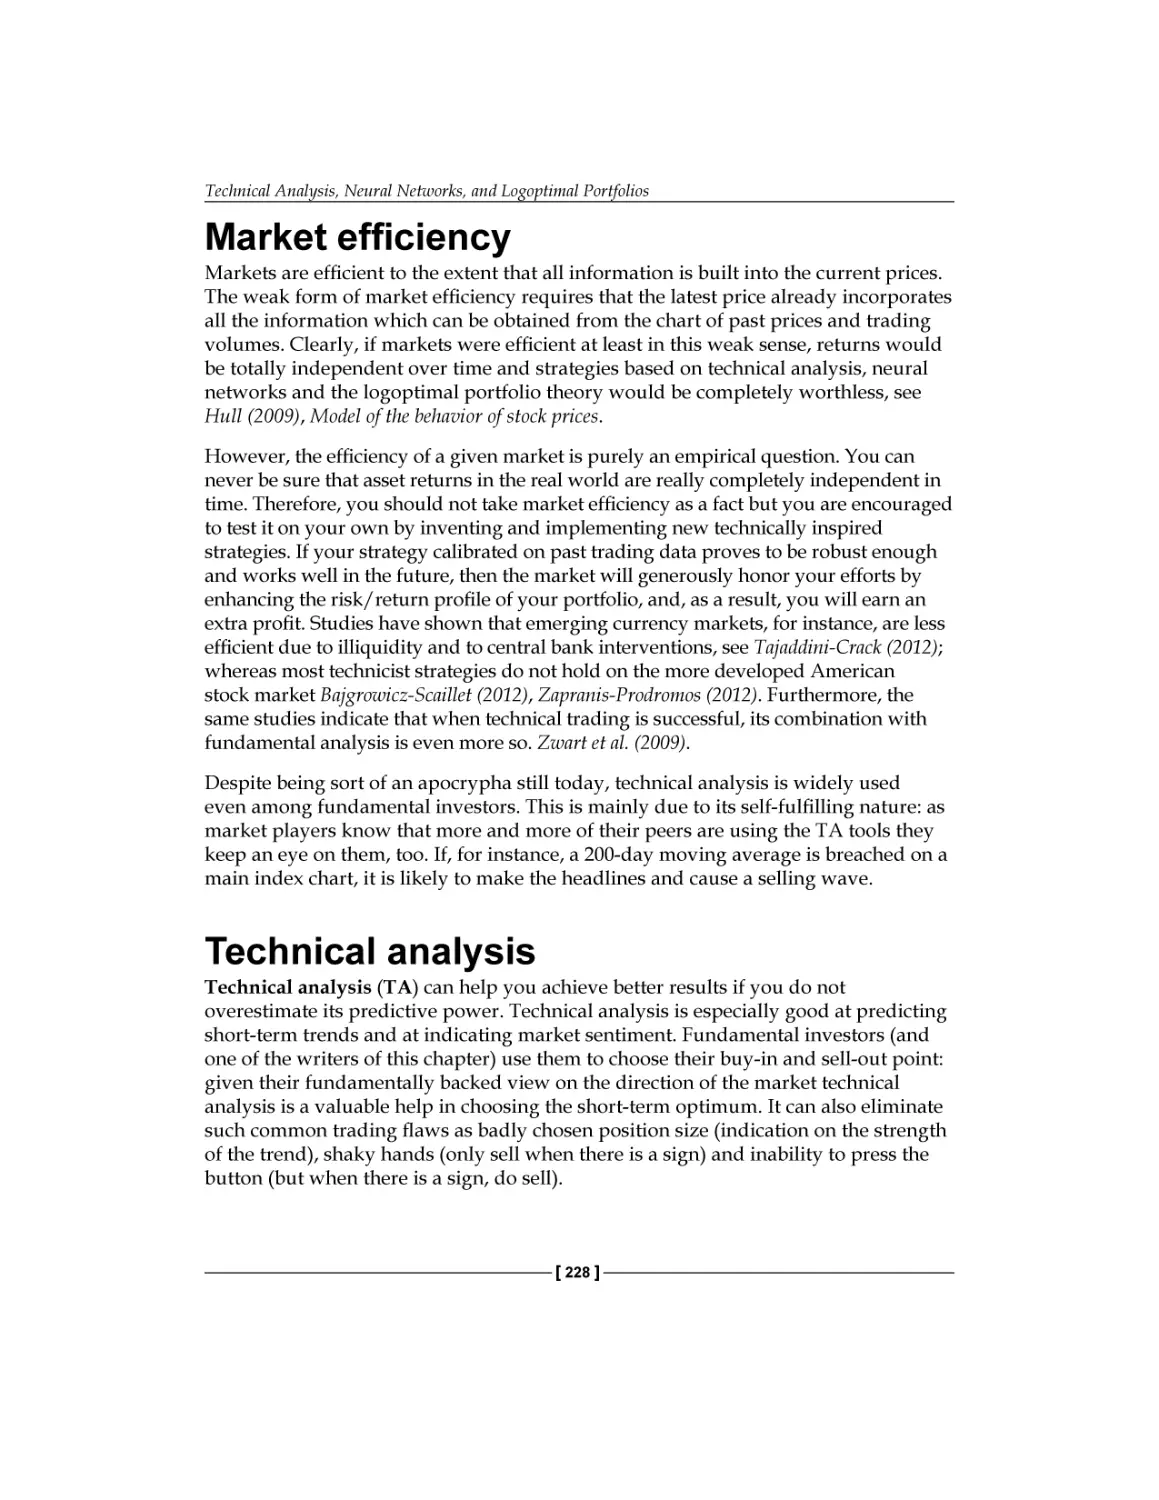 Market efficiency
Technical Analysis